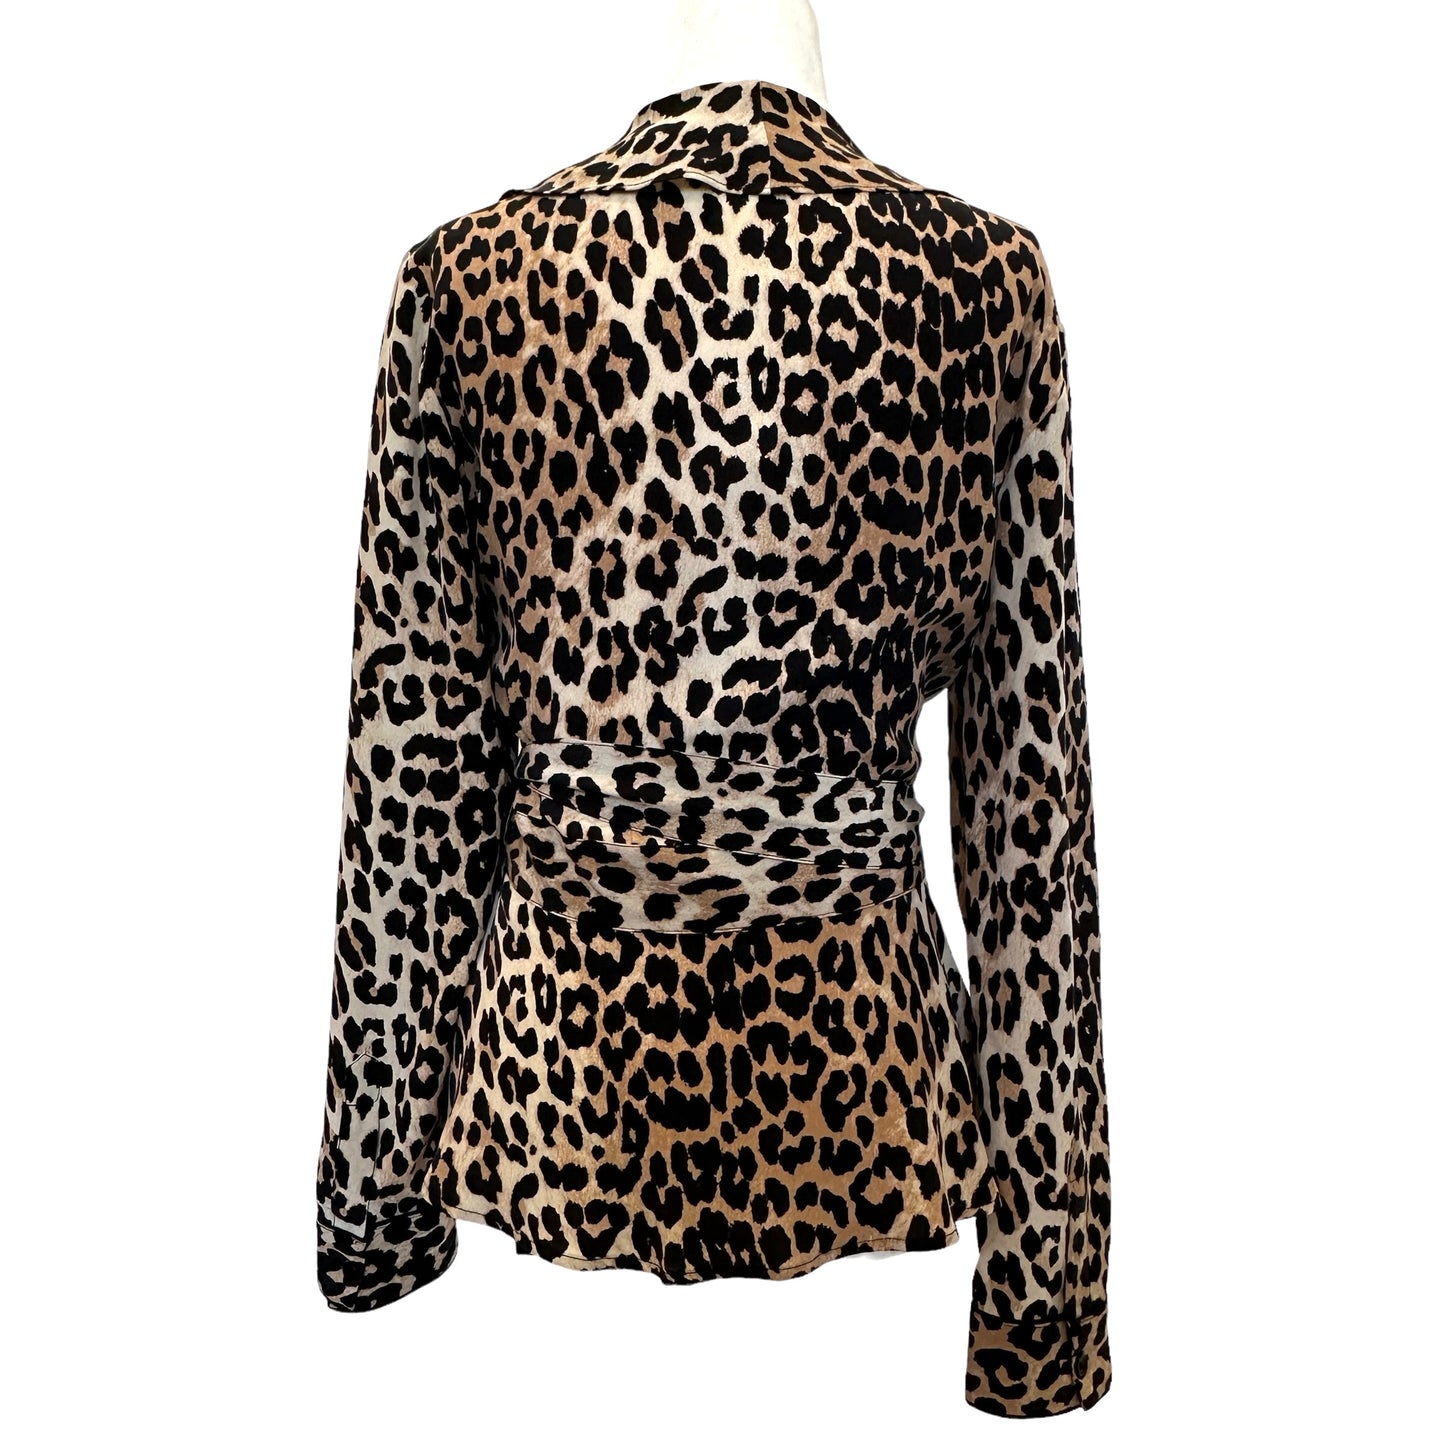 Leopard Shirt - S/M